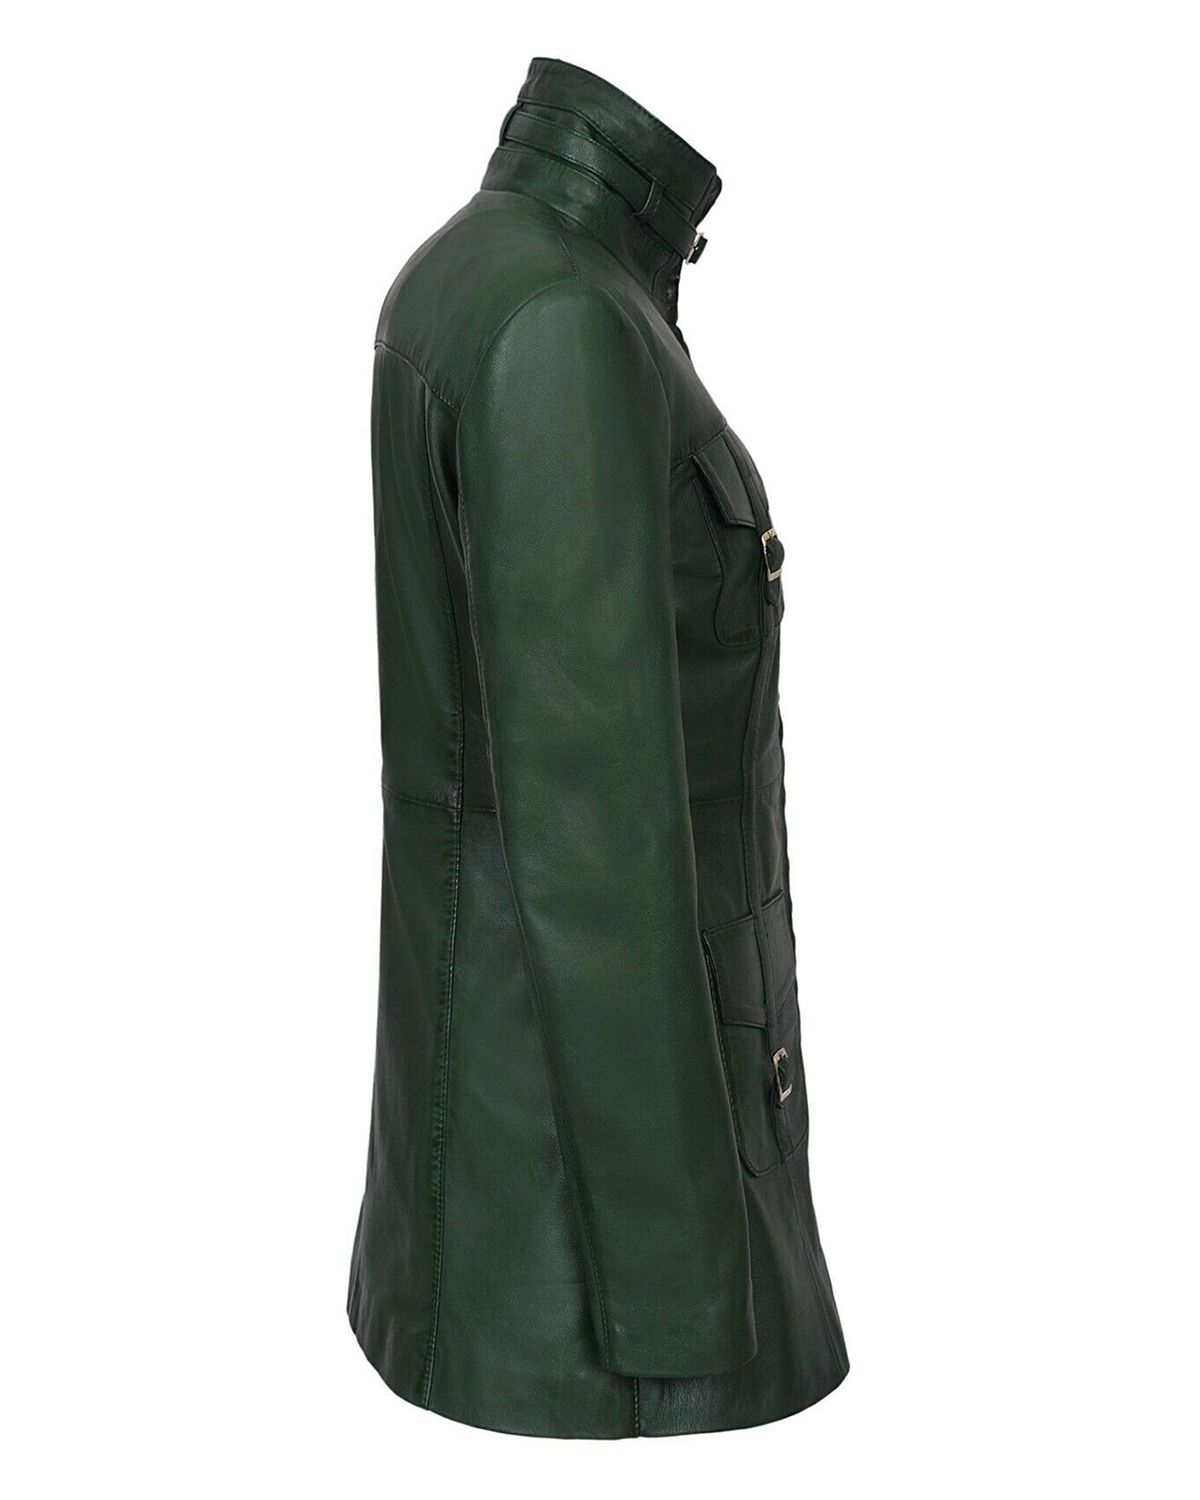 Gothic Style Mid Length Coats For Women | Elite Jacket